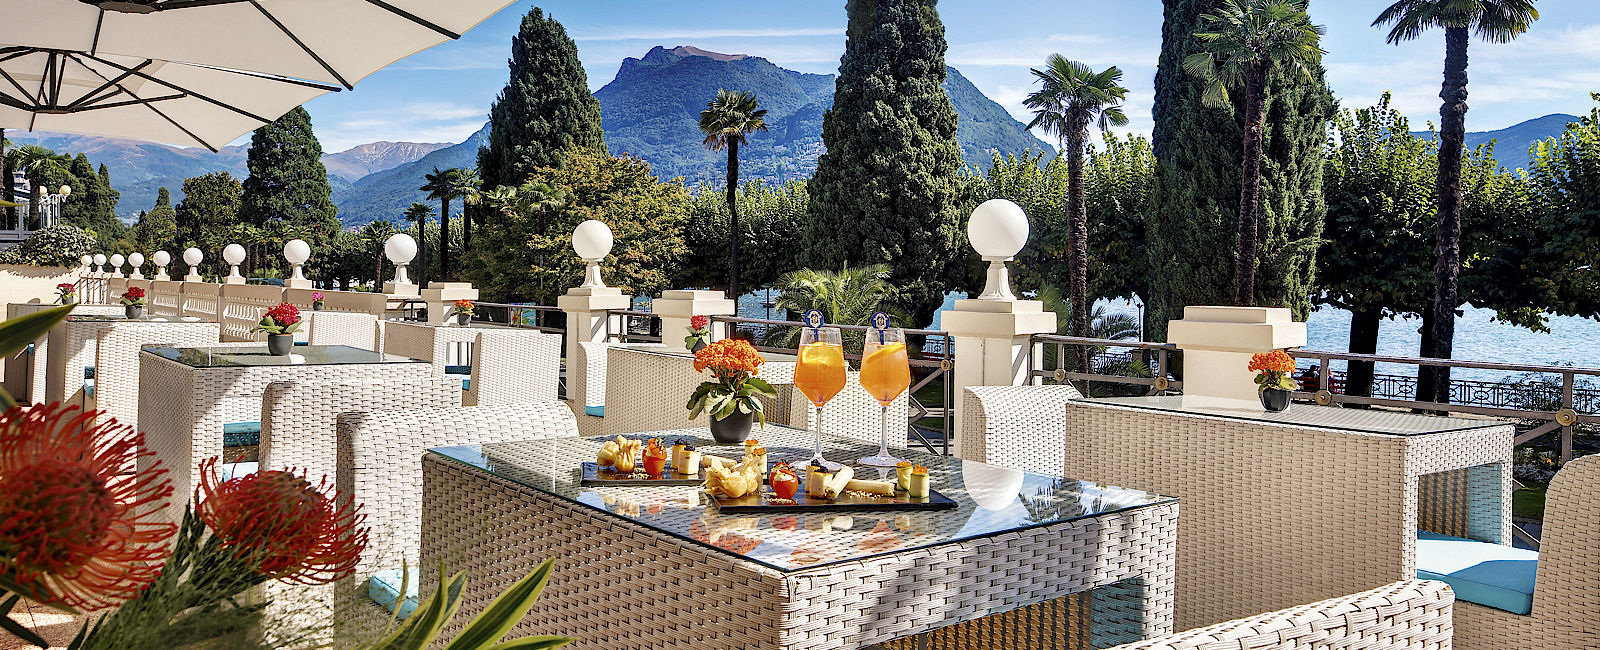 HOTELTEST
 Hotel Splendide Royal Lugano 
 Adel verpflichtet 